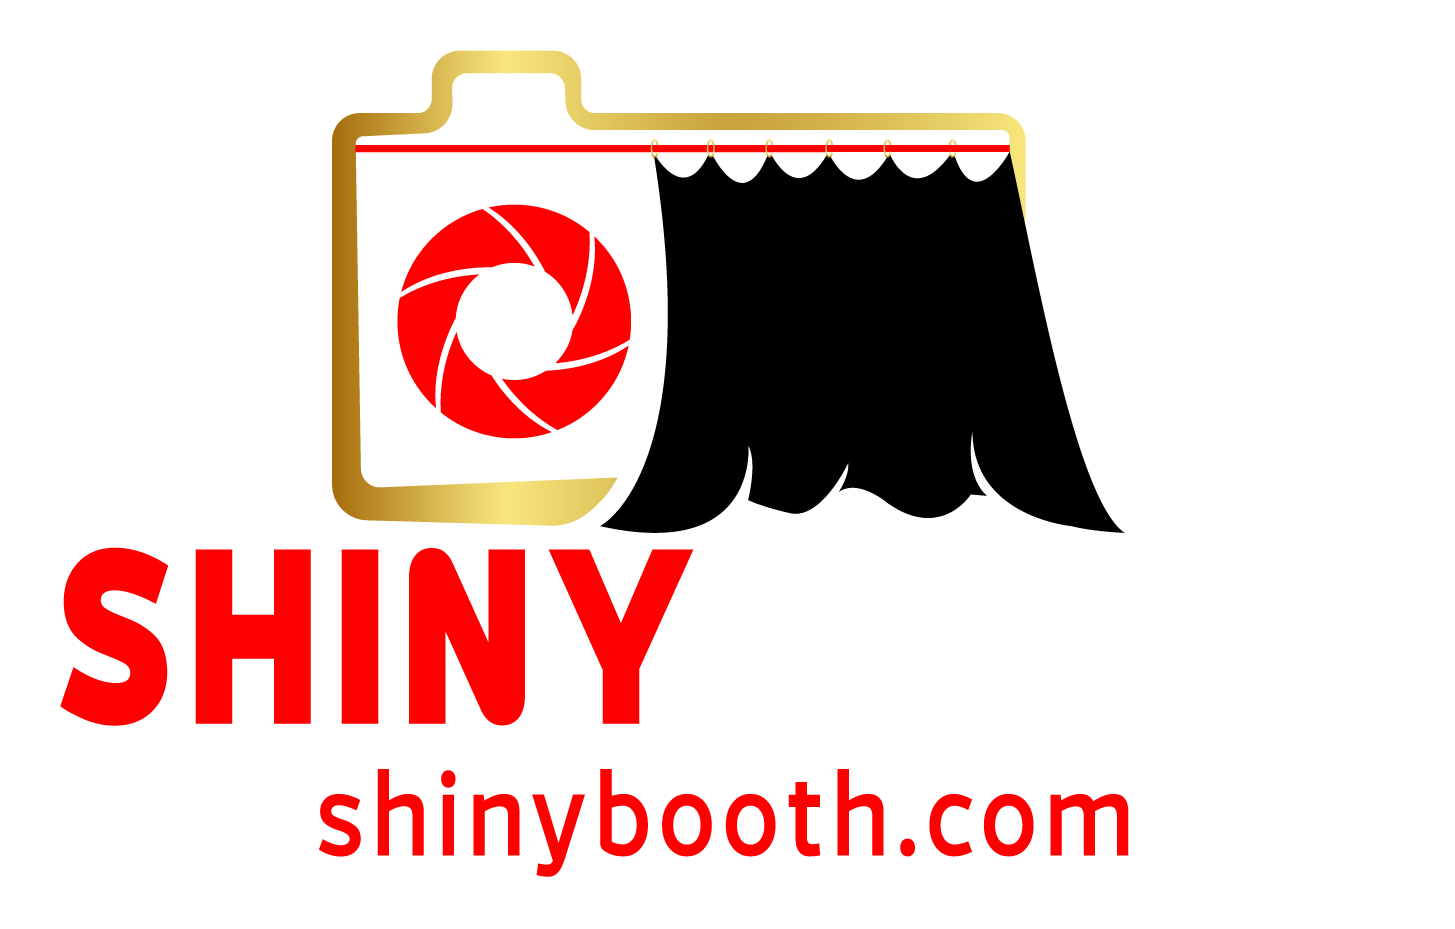 Shinybooth.com